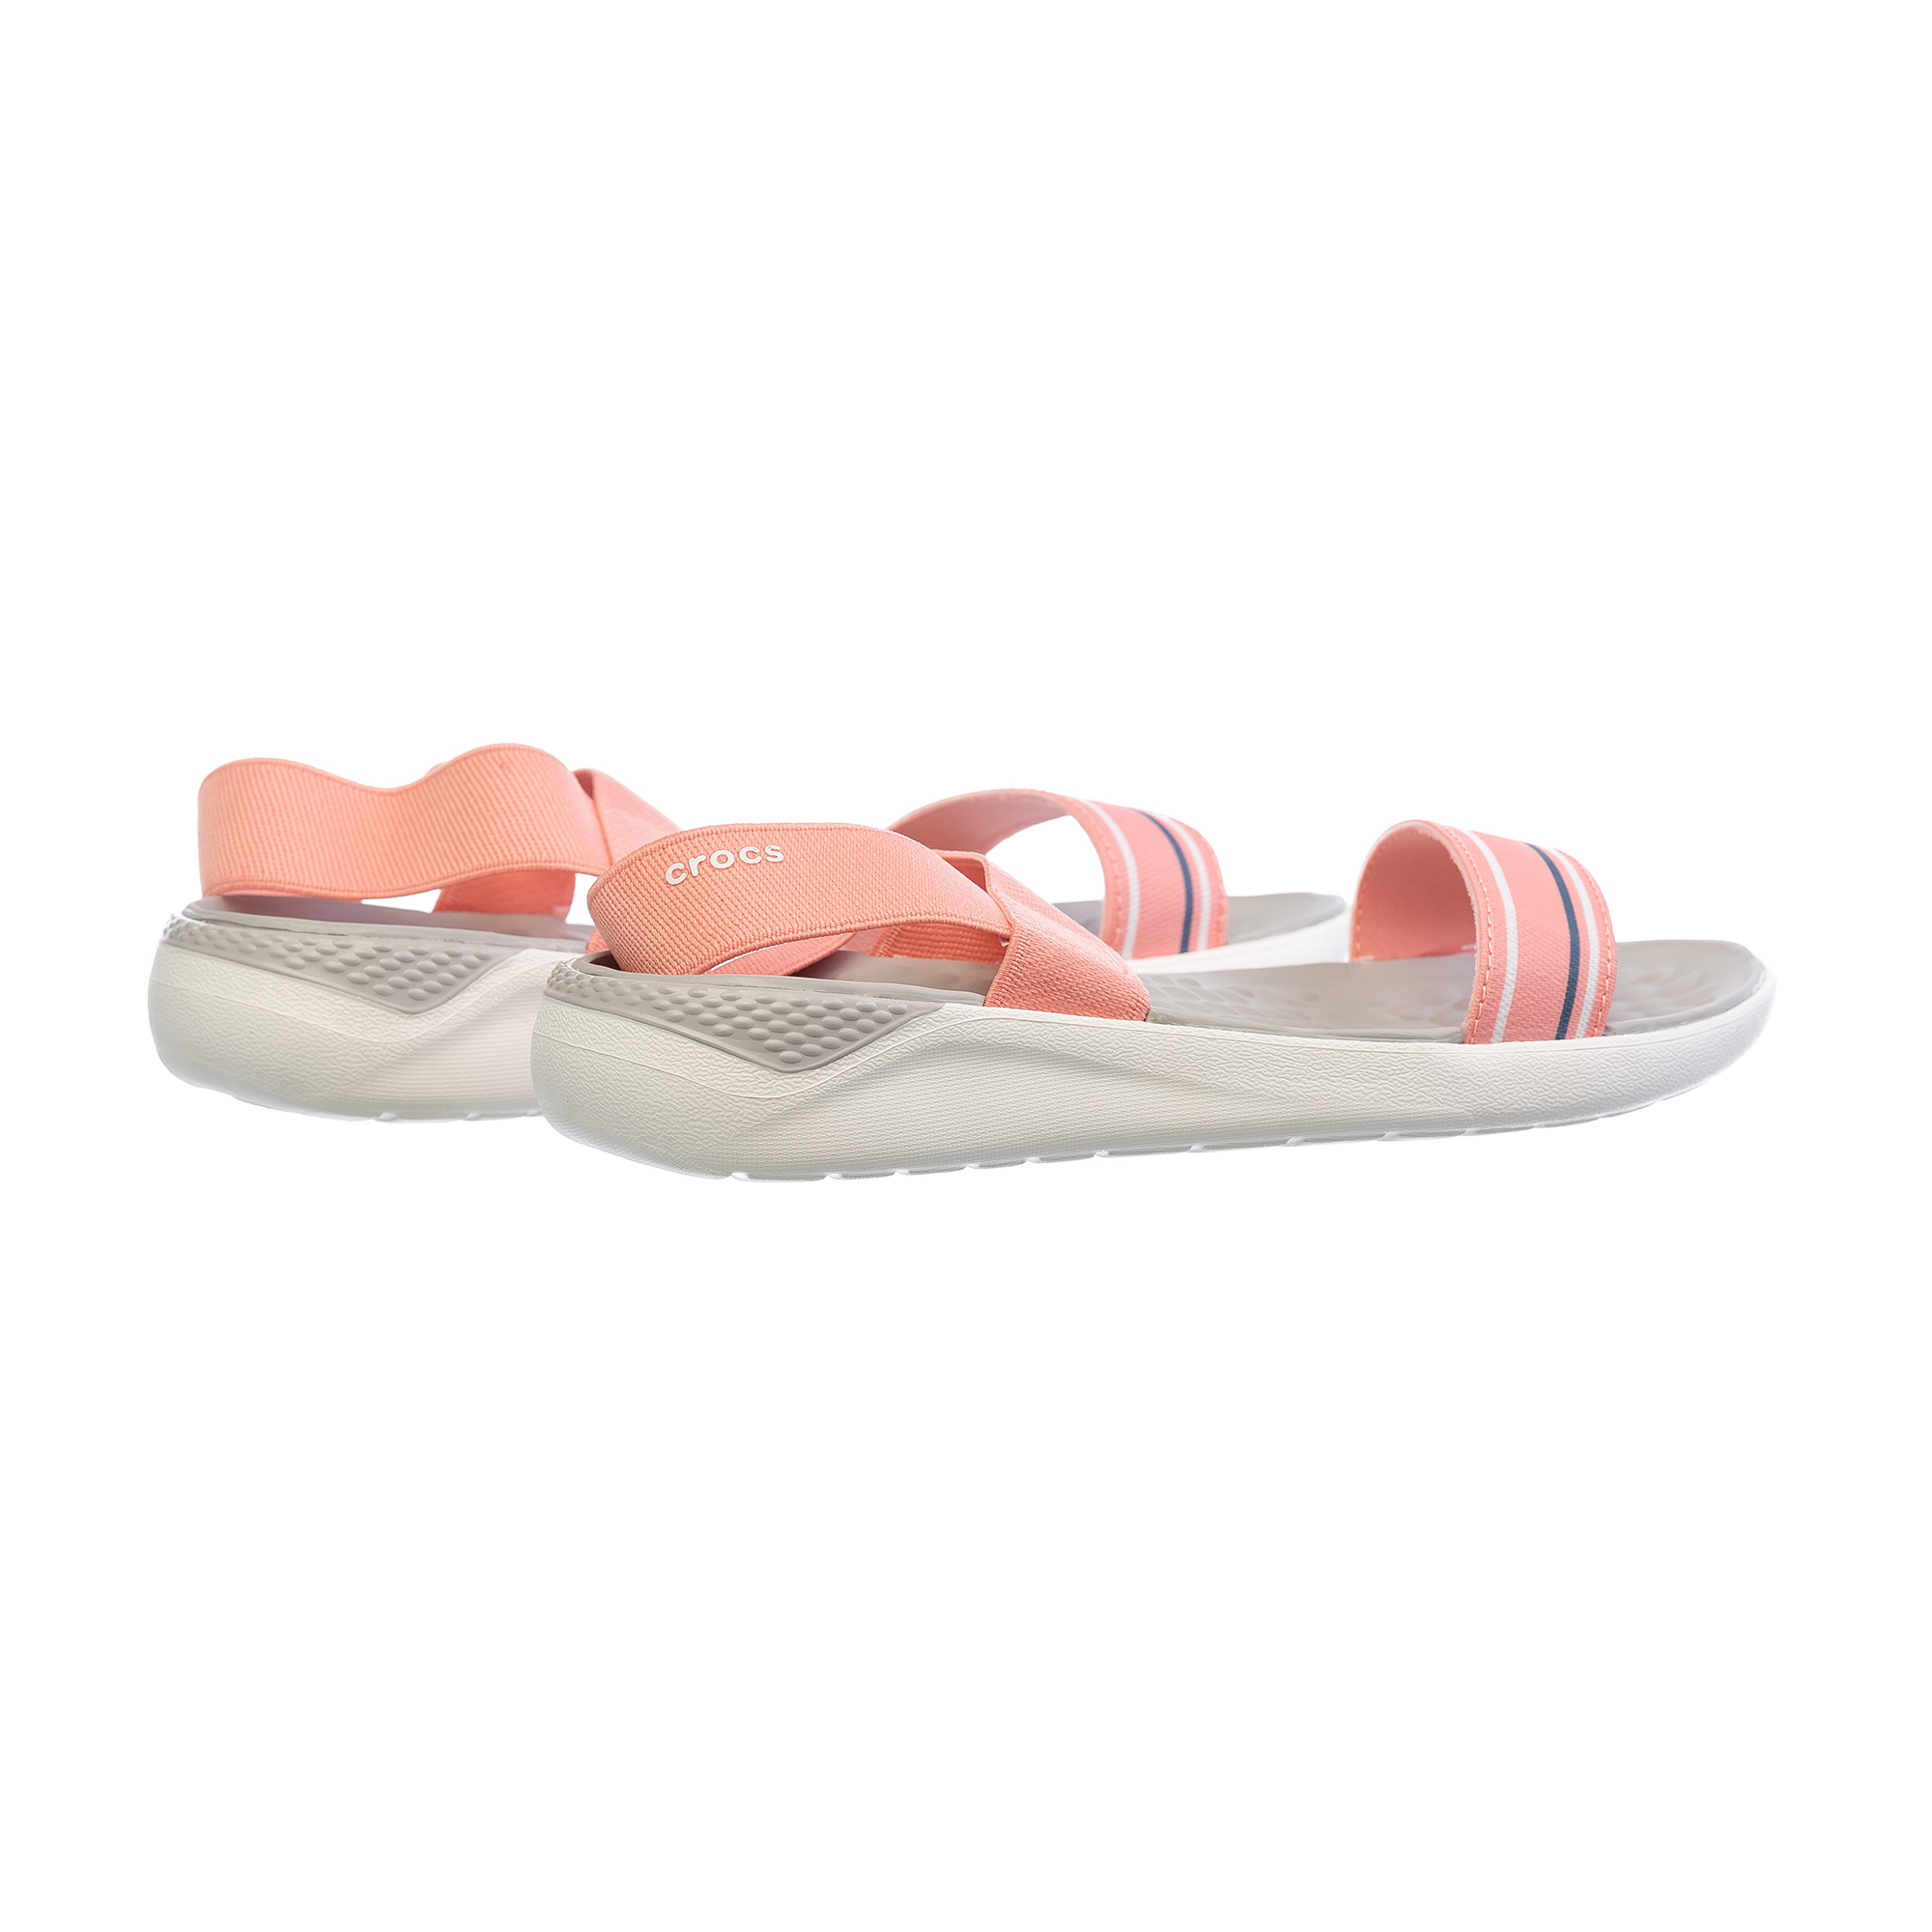 LiteRide Sandal W Crocs, размер 36, цвет розовый CR205106 - фото 3